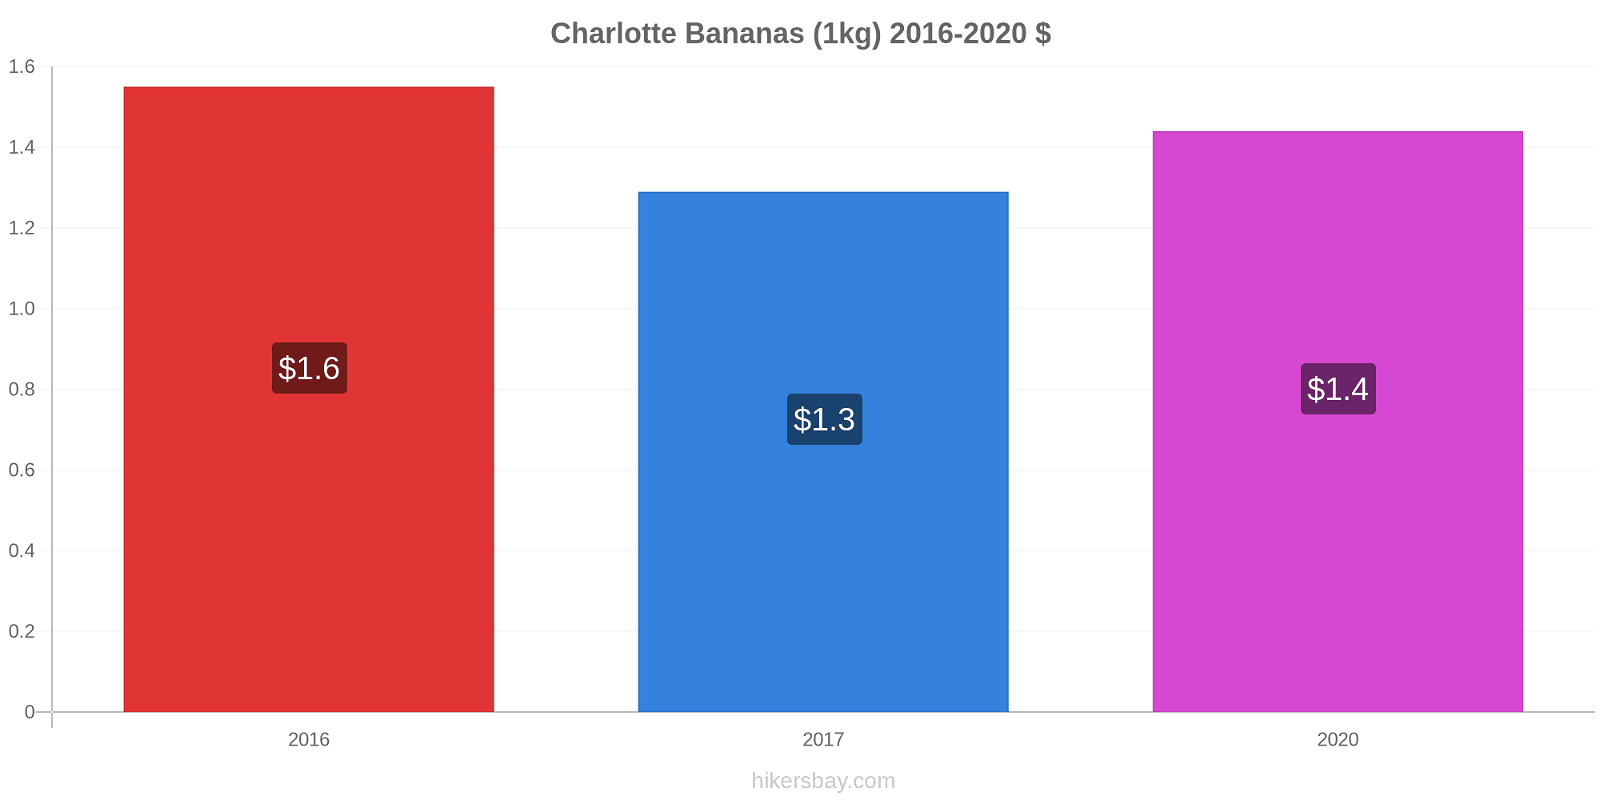 Charlotte price changes Bananas (1kg) hikersbay.com